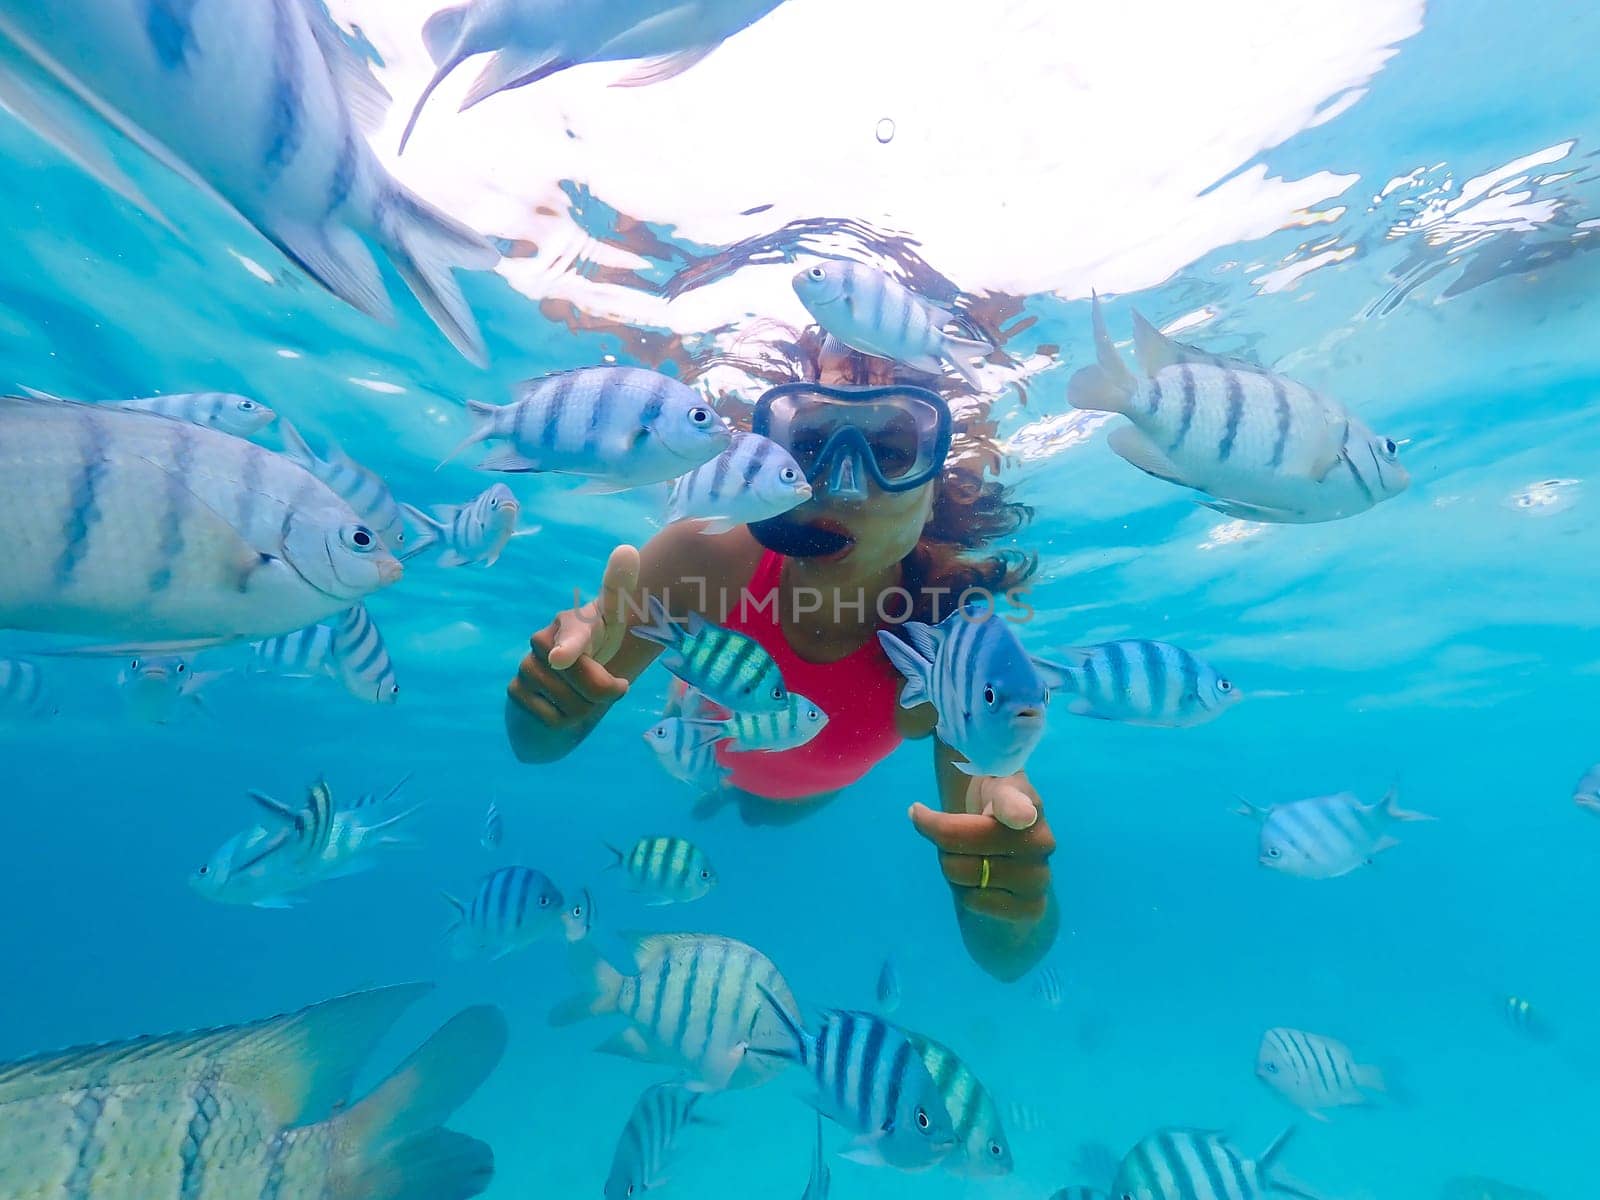 snorkeling trip at Samaesan Thailand dive underwater with fishes in the coral reef sea pool by fokkebok